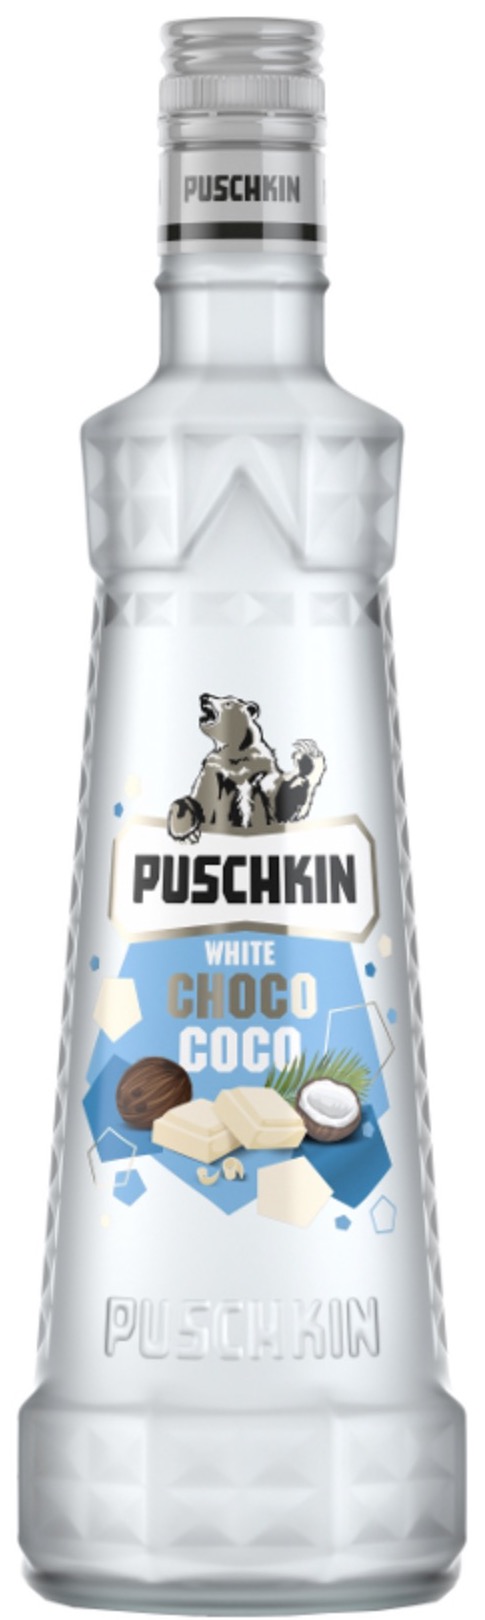 Puschkin White Choco Coco Wodka 17,5% vol. 0,7l